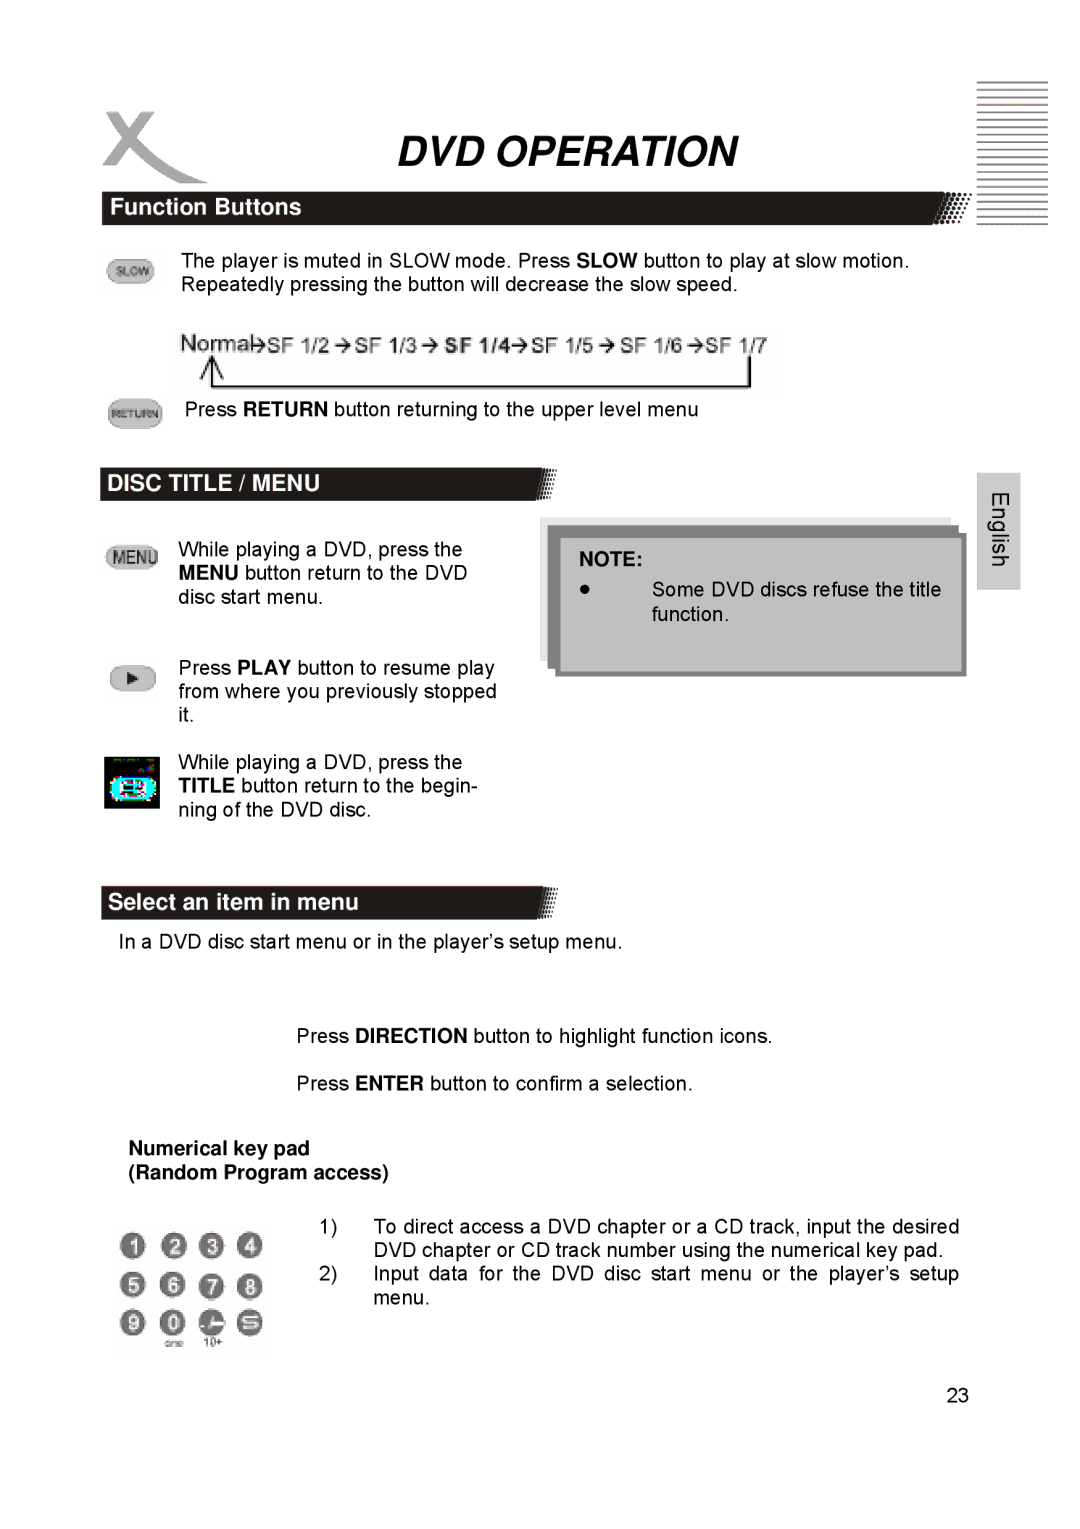 Xoro HTC1900D manual Disc Title / Menu, Select an item in menu 